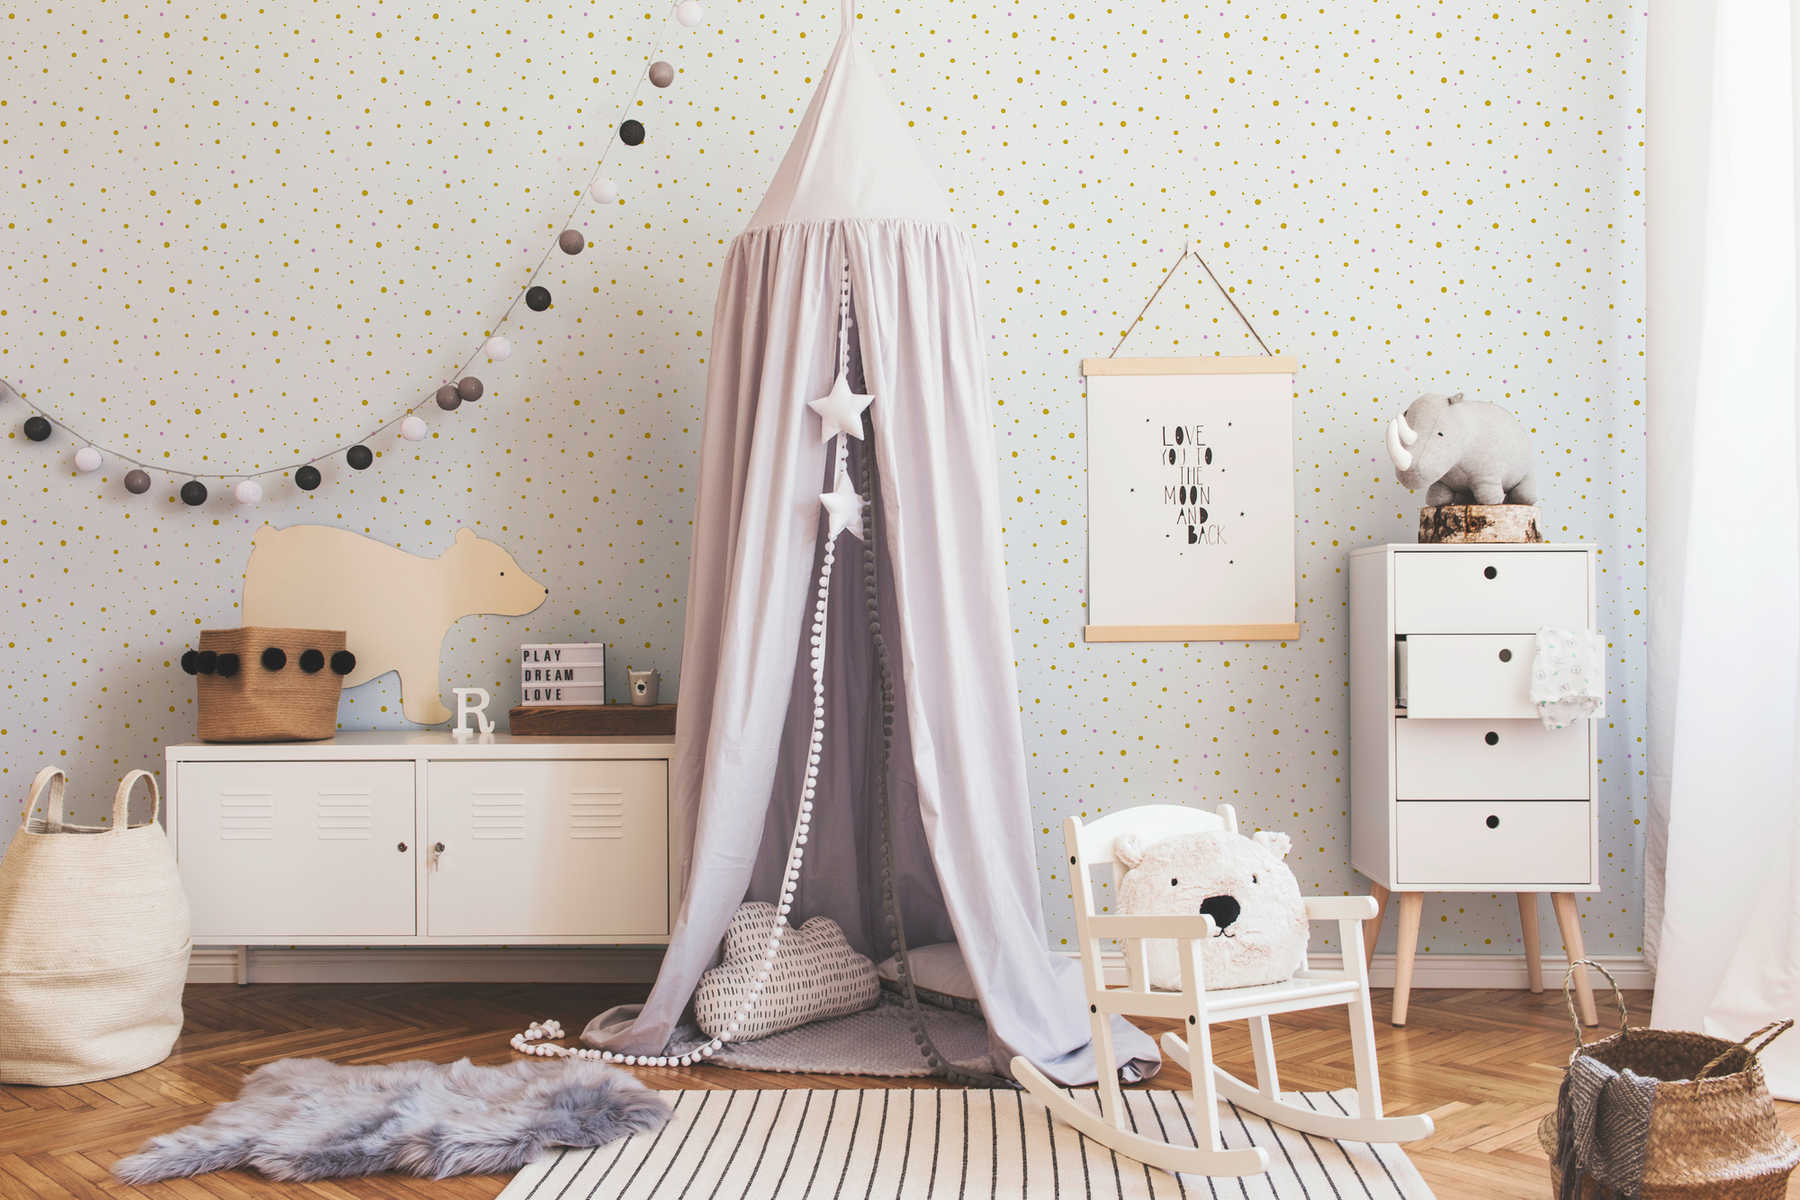             Wallpaper dots & metallic effect for Nursery - white
        